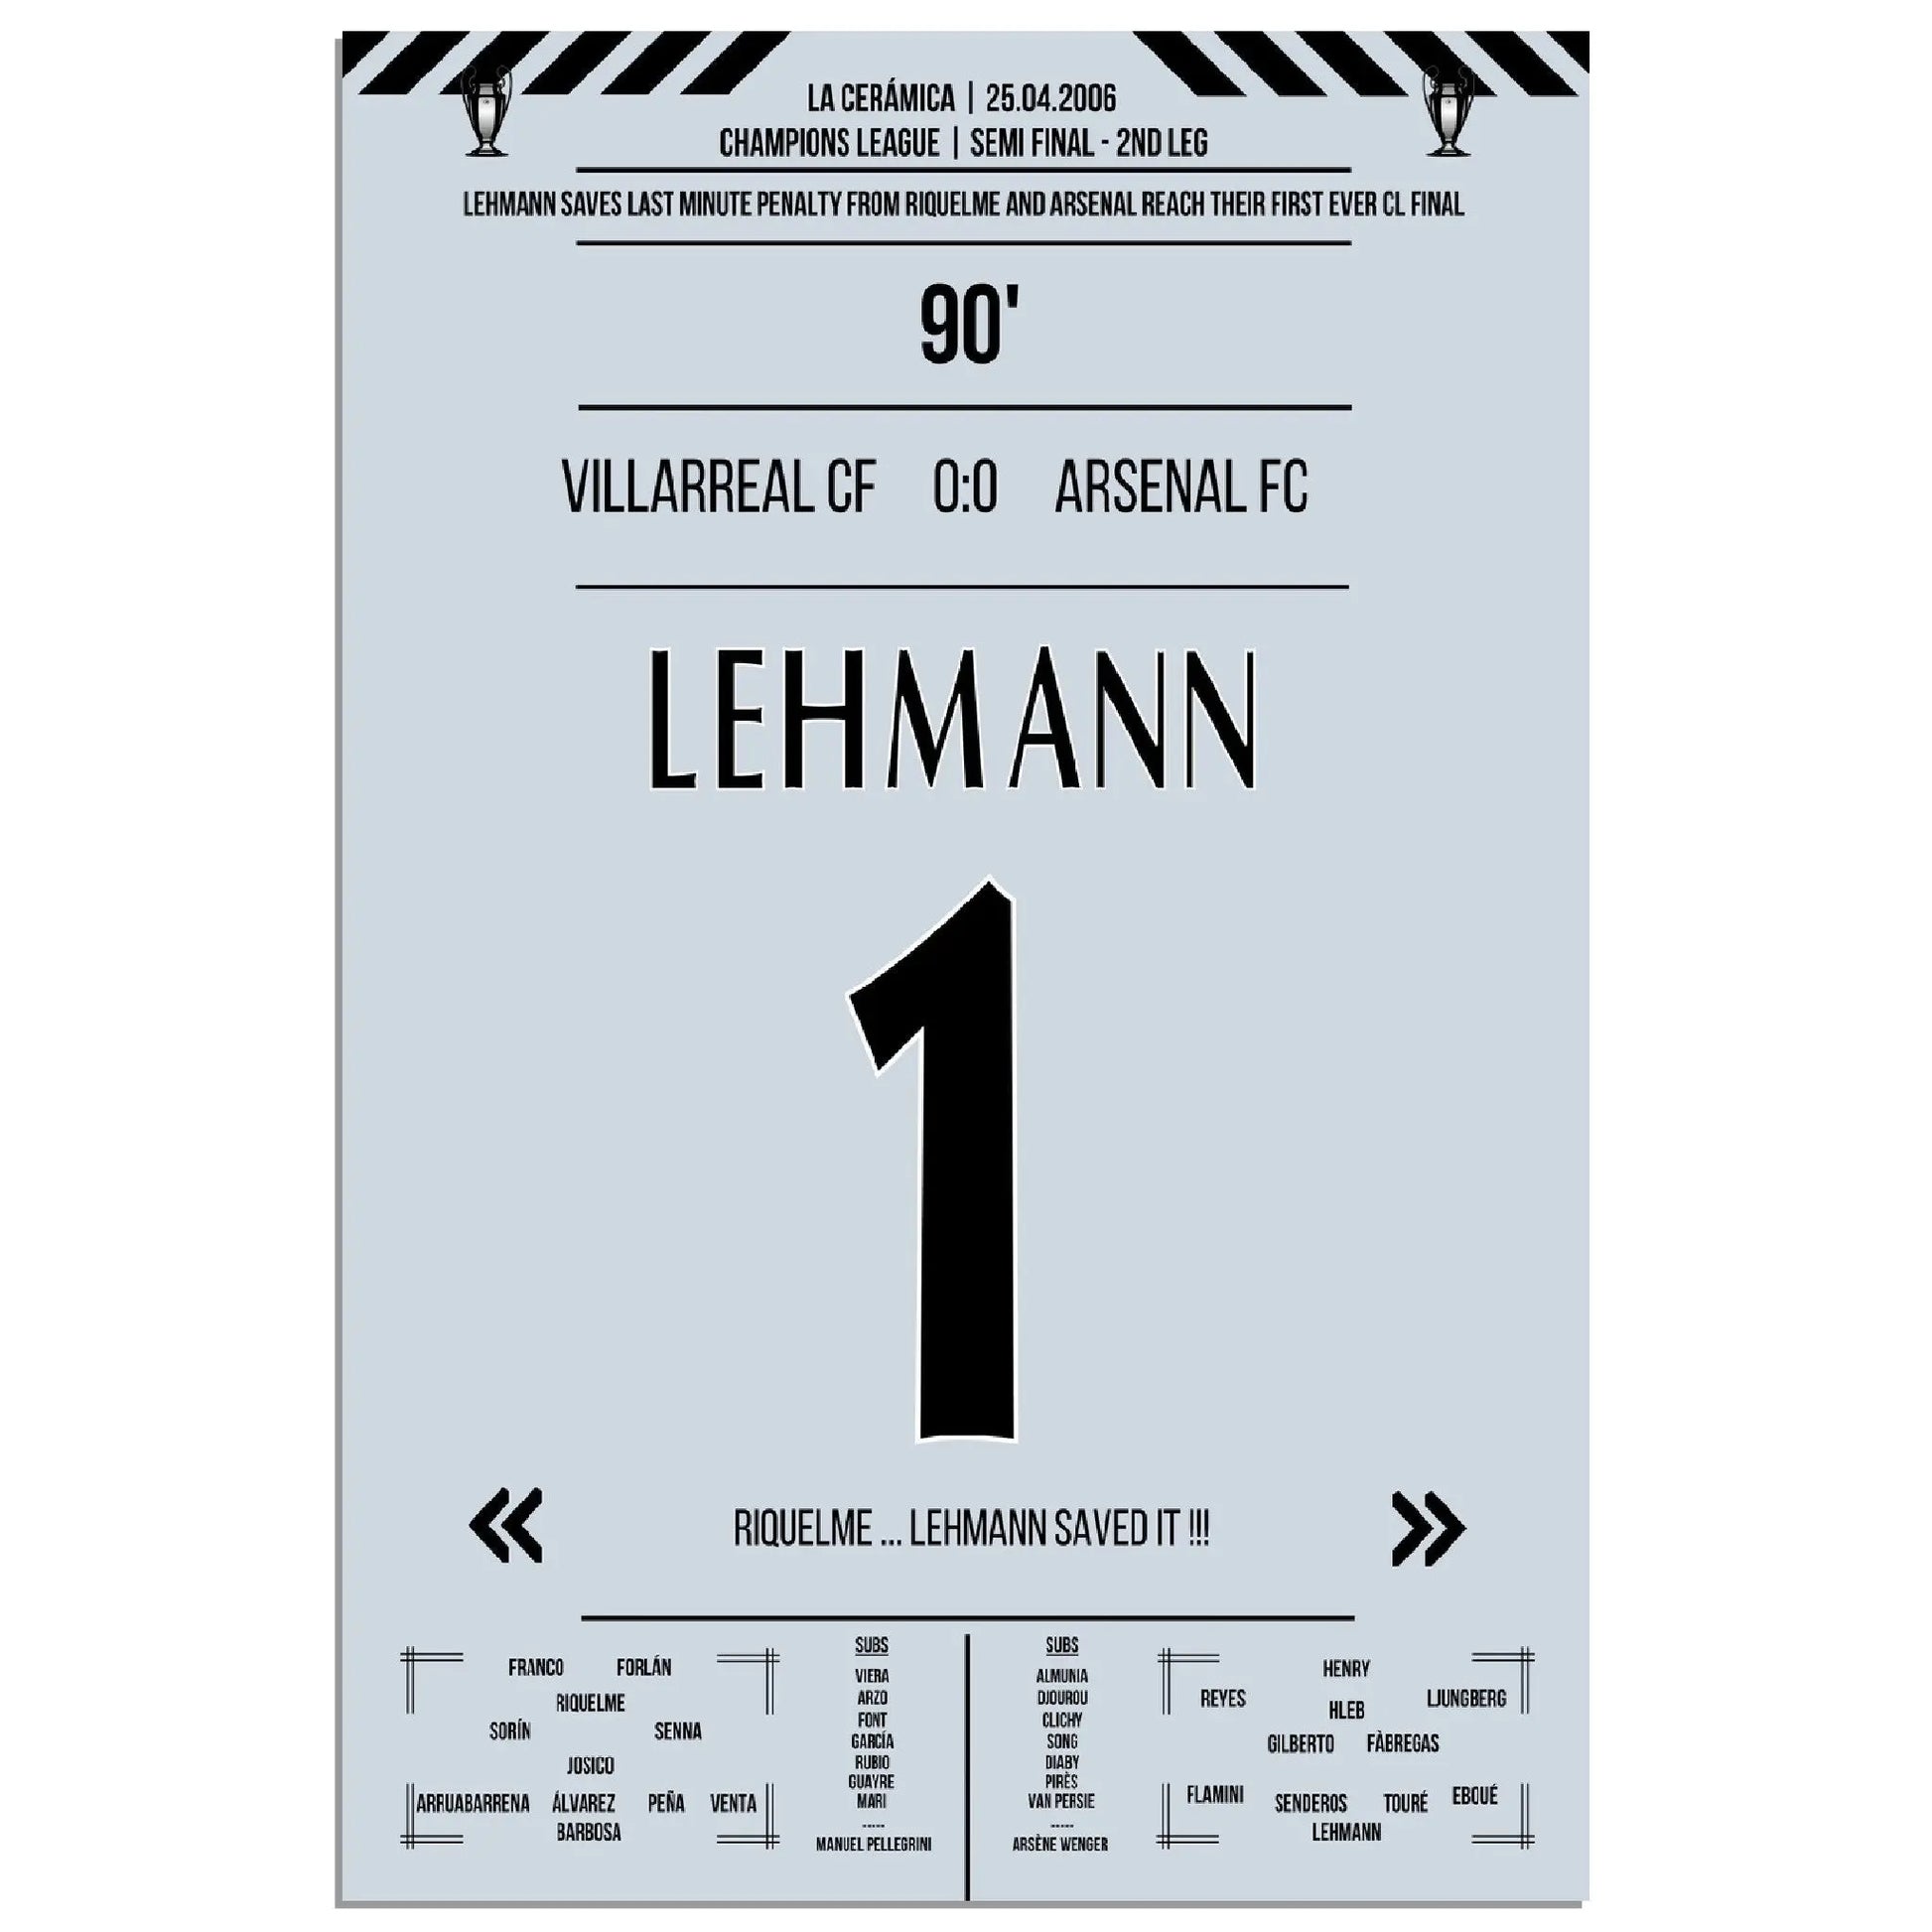 Lehmann hält Riquelmes Elfmeter und führt Arsenal ins Champions League Finale 2006 